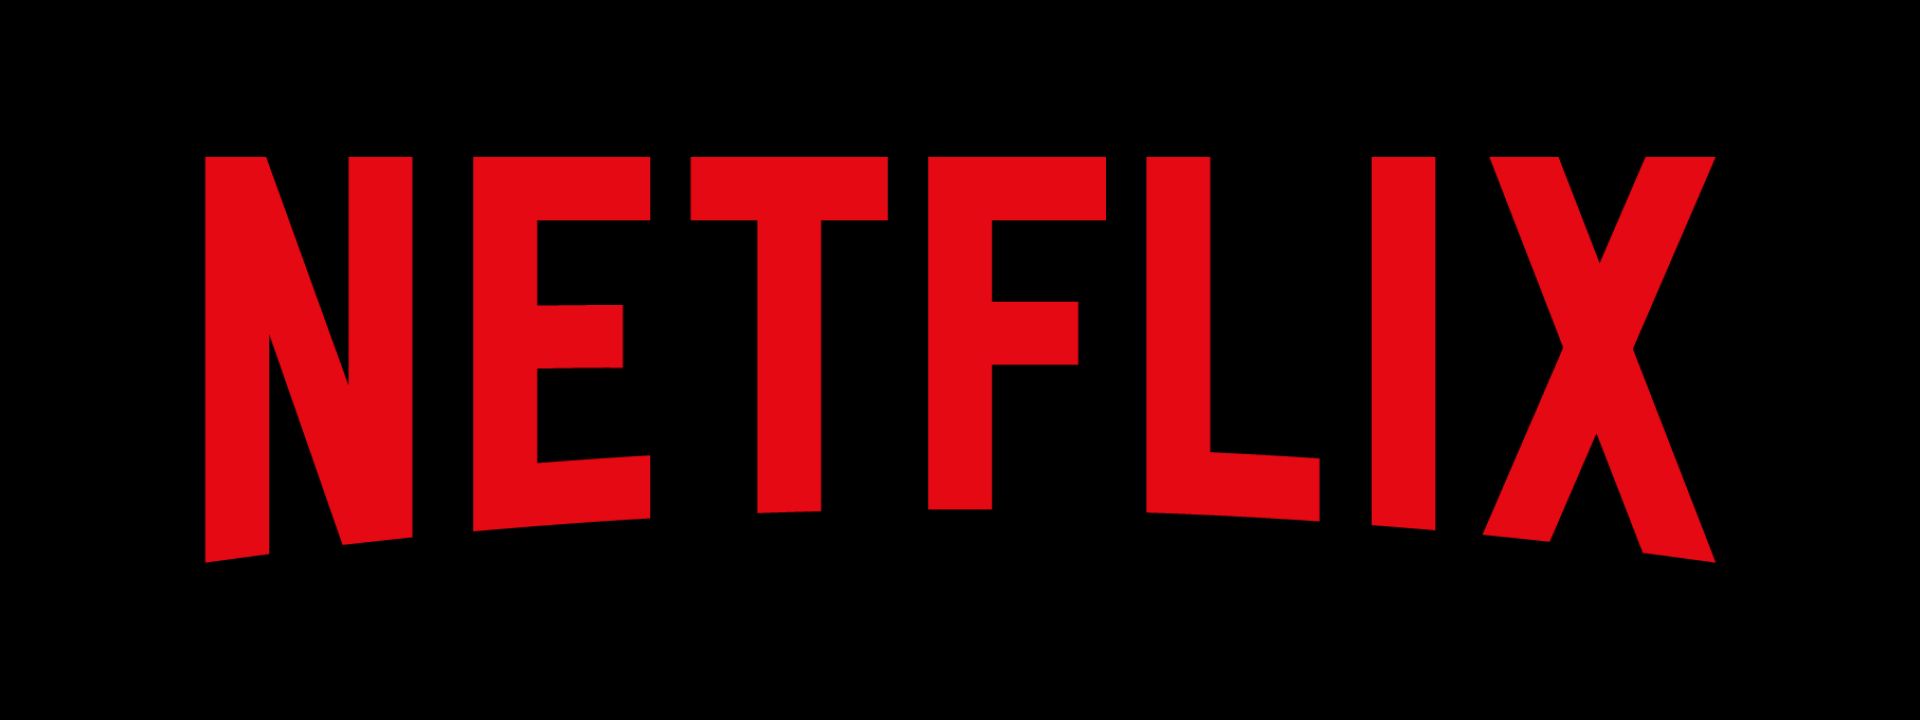 Chepest Netflix Group Buy Account Premium 4K For 12 Months